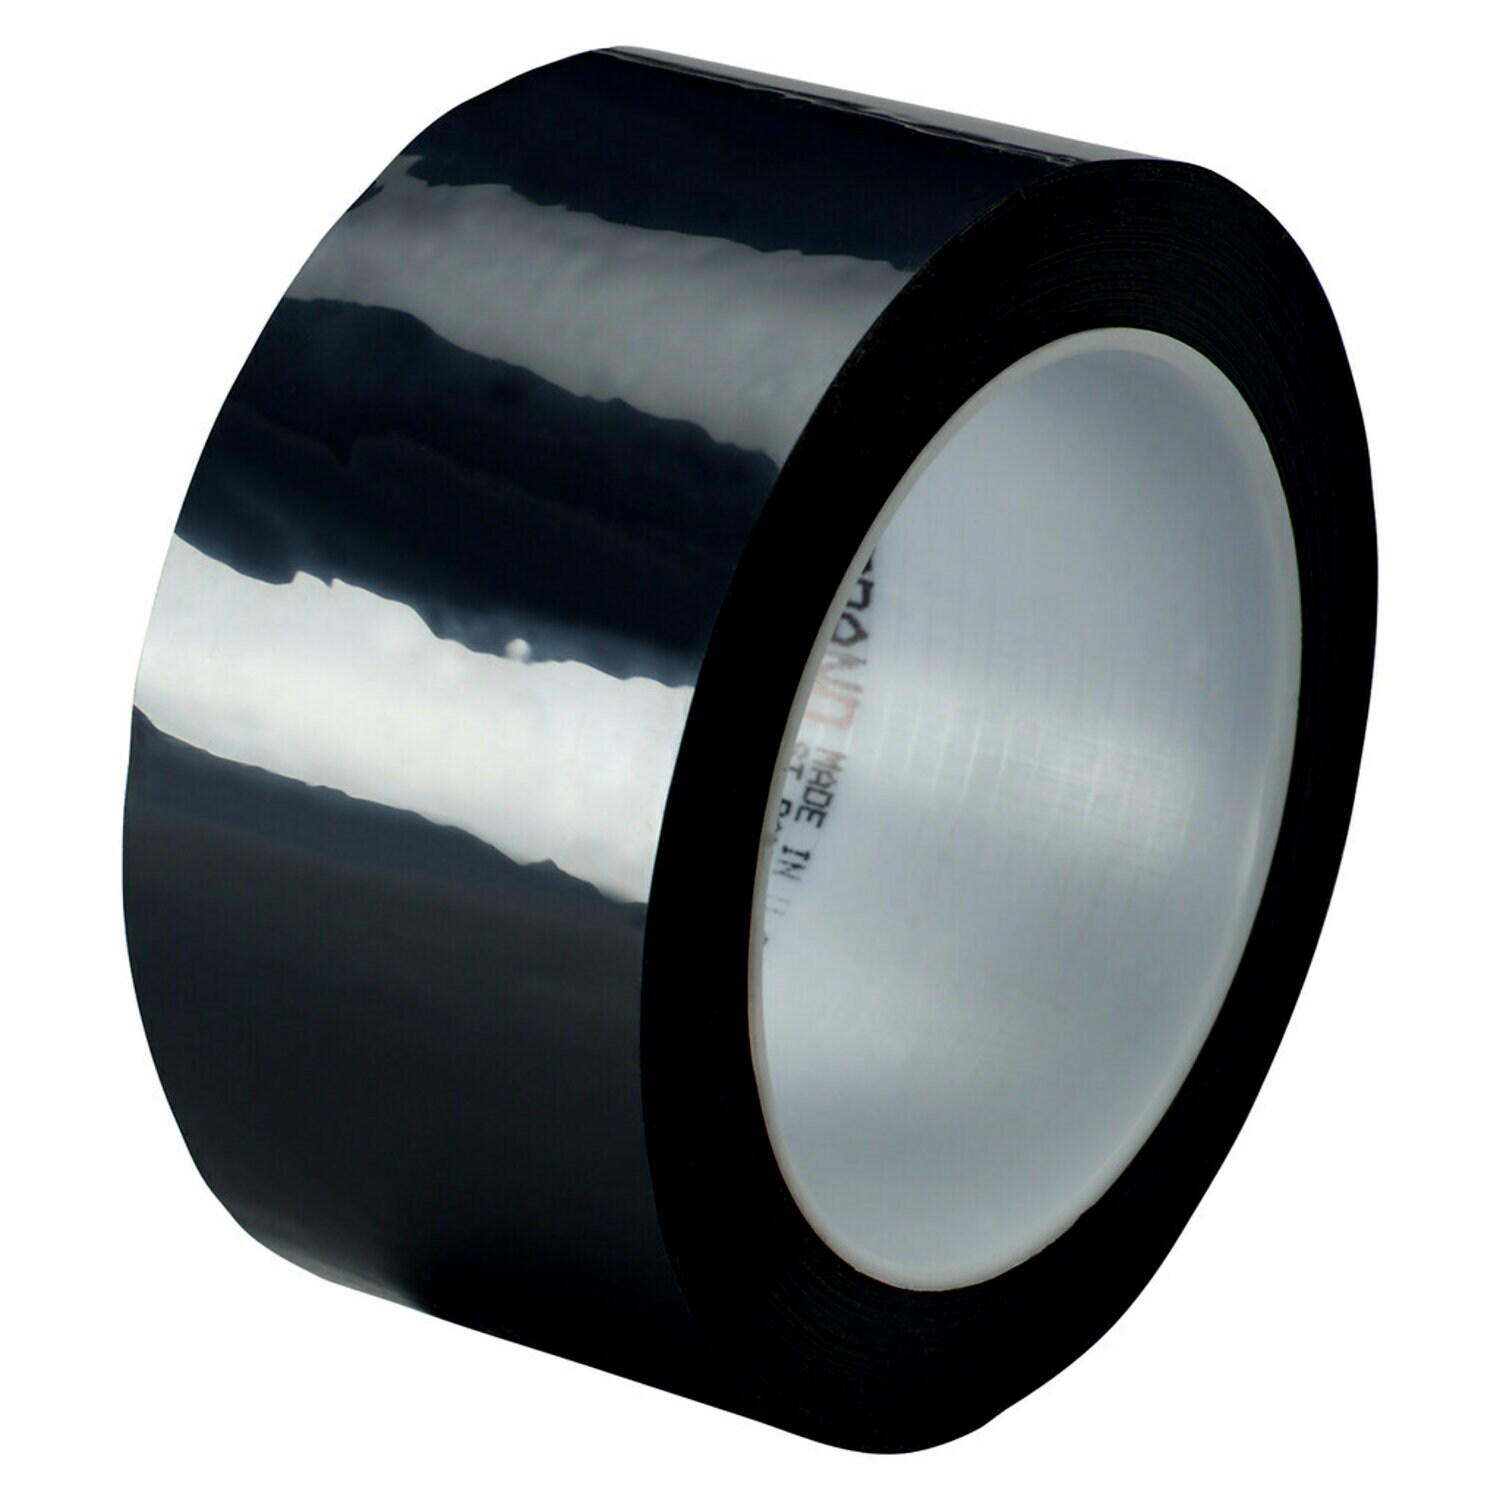 7100094489 - 3M Photo Film Splicing Tape 8422, Black, 1/2 in x 360 yd, 2.5 mil, 18
rolls per case, Plastic Core